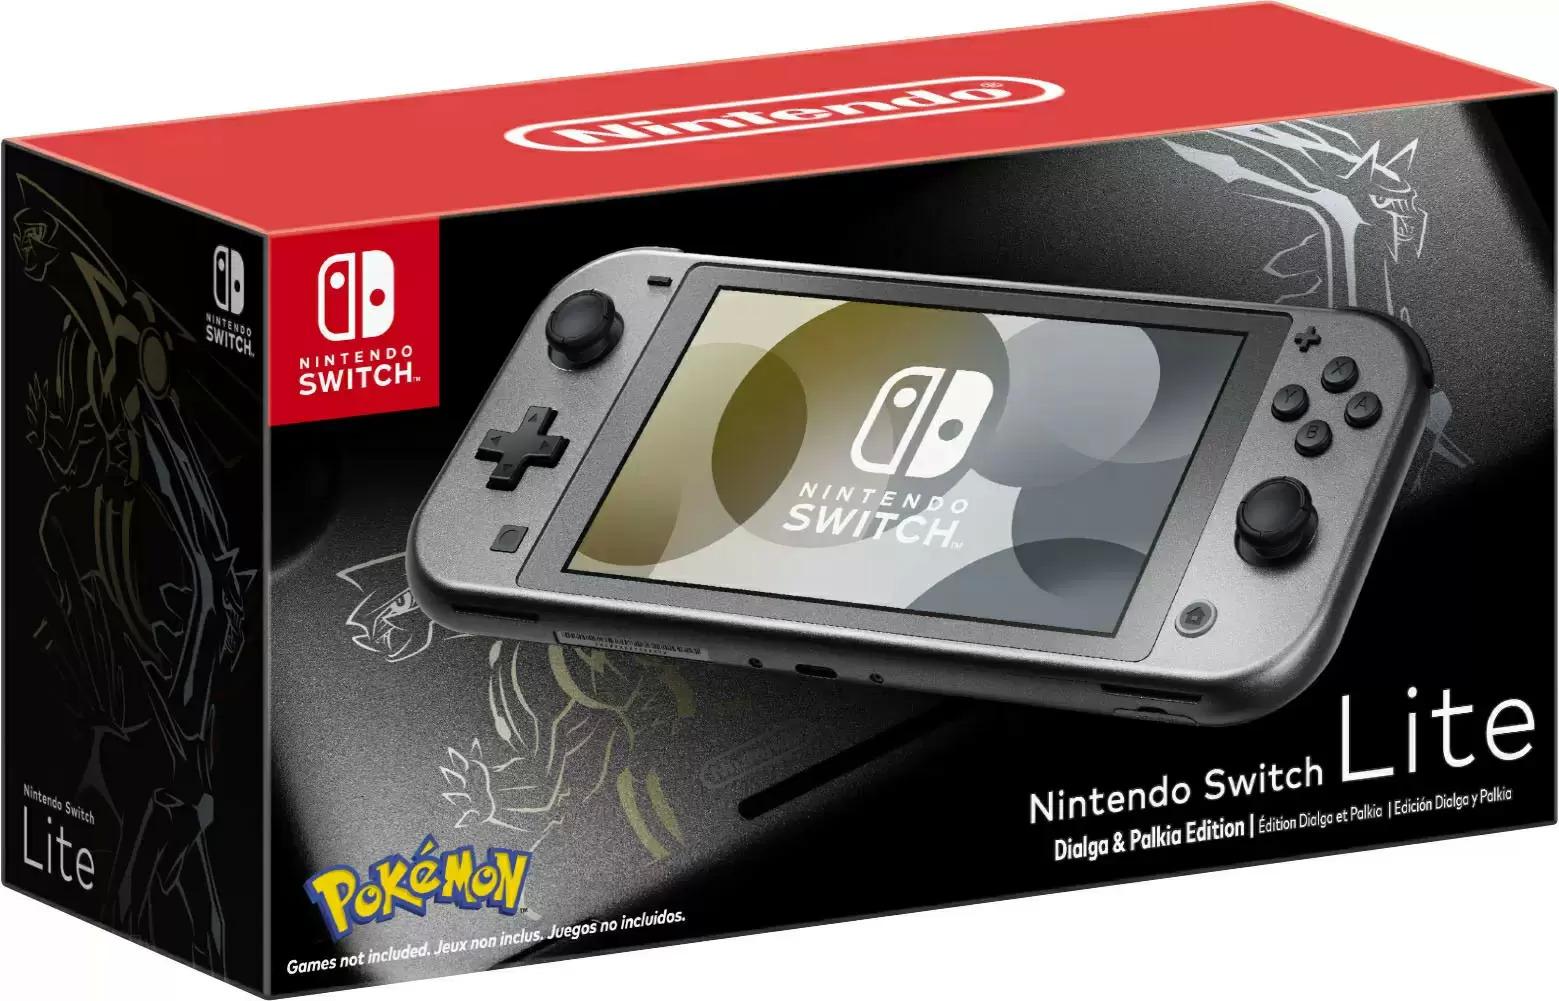 Nintendo Switch Lite Dialga and Palkia Edition Still Available